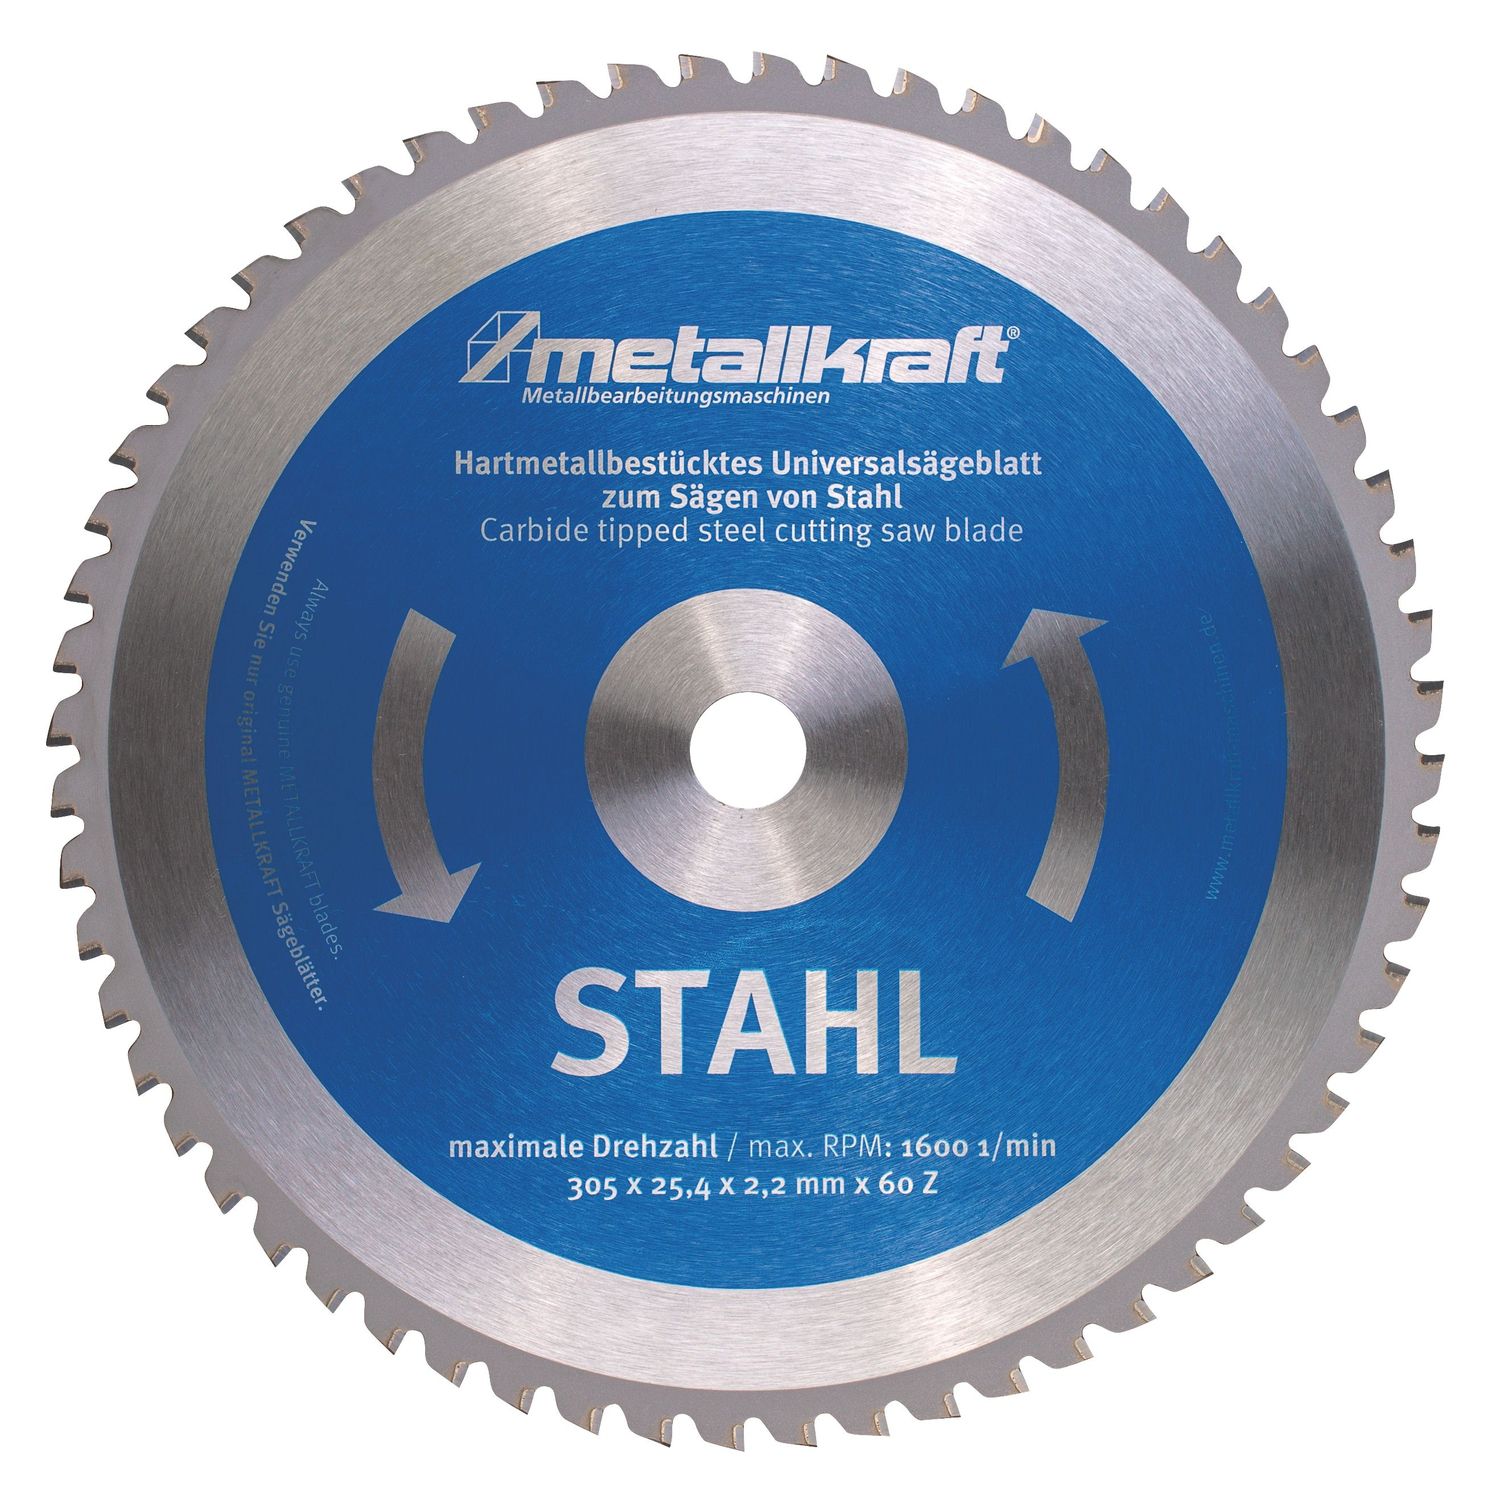 HM Metall-Kreissägeblatt Ø 305 / 25,4 x 2,4 mm | Z60 - Stahl